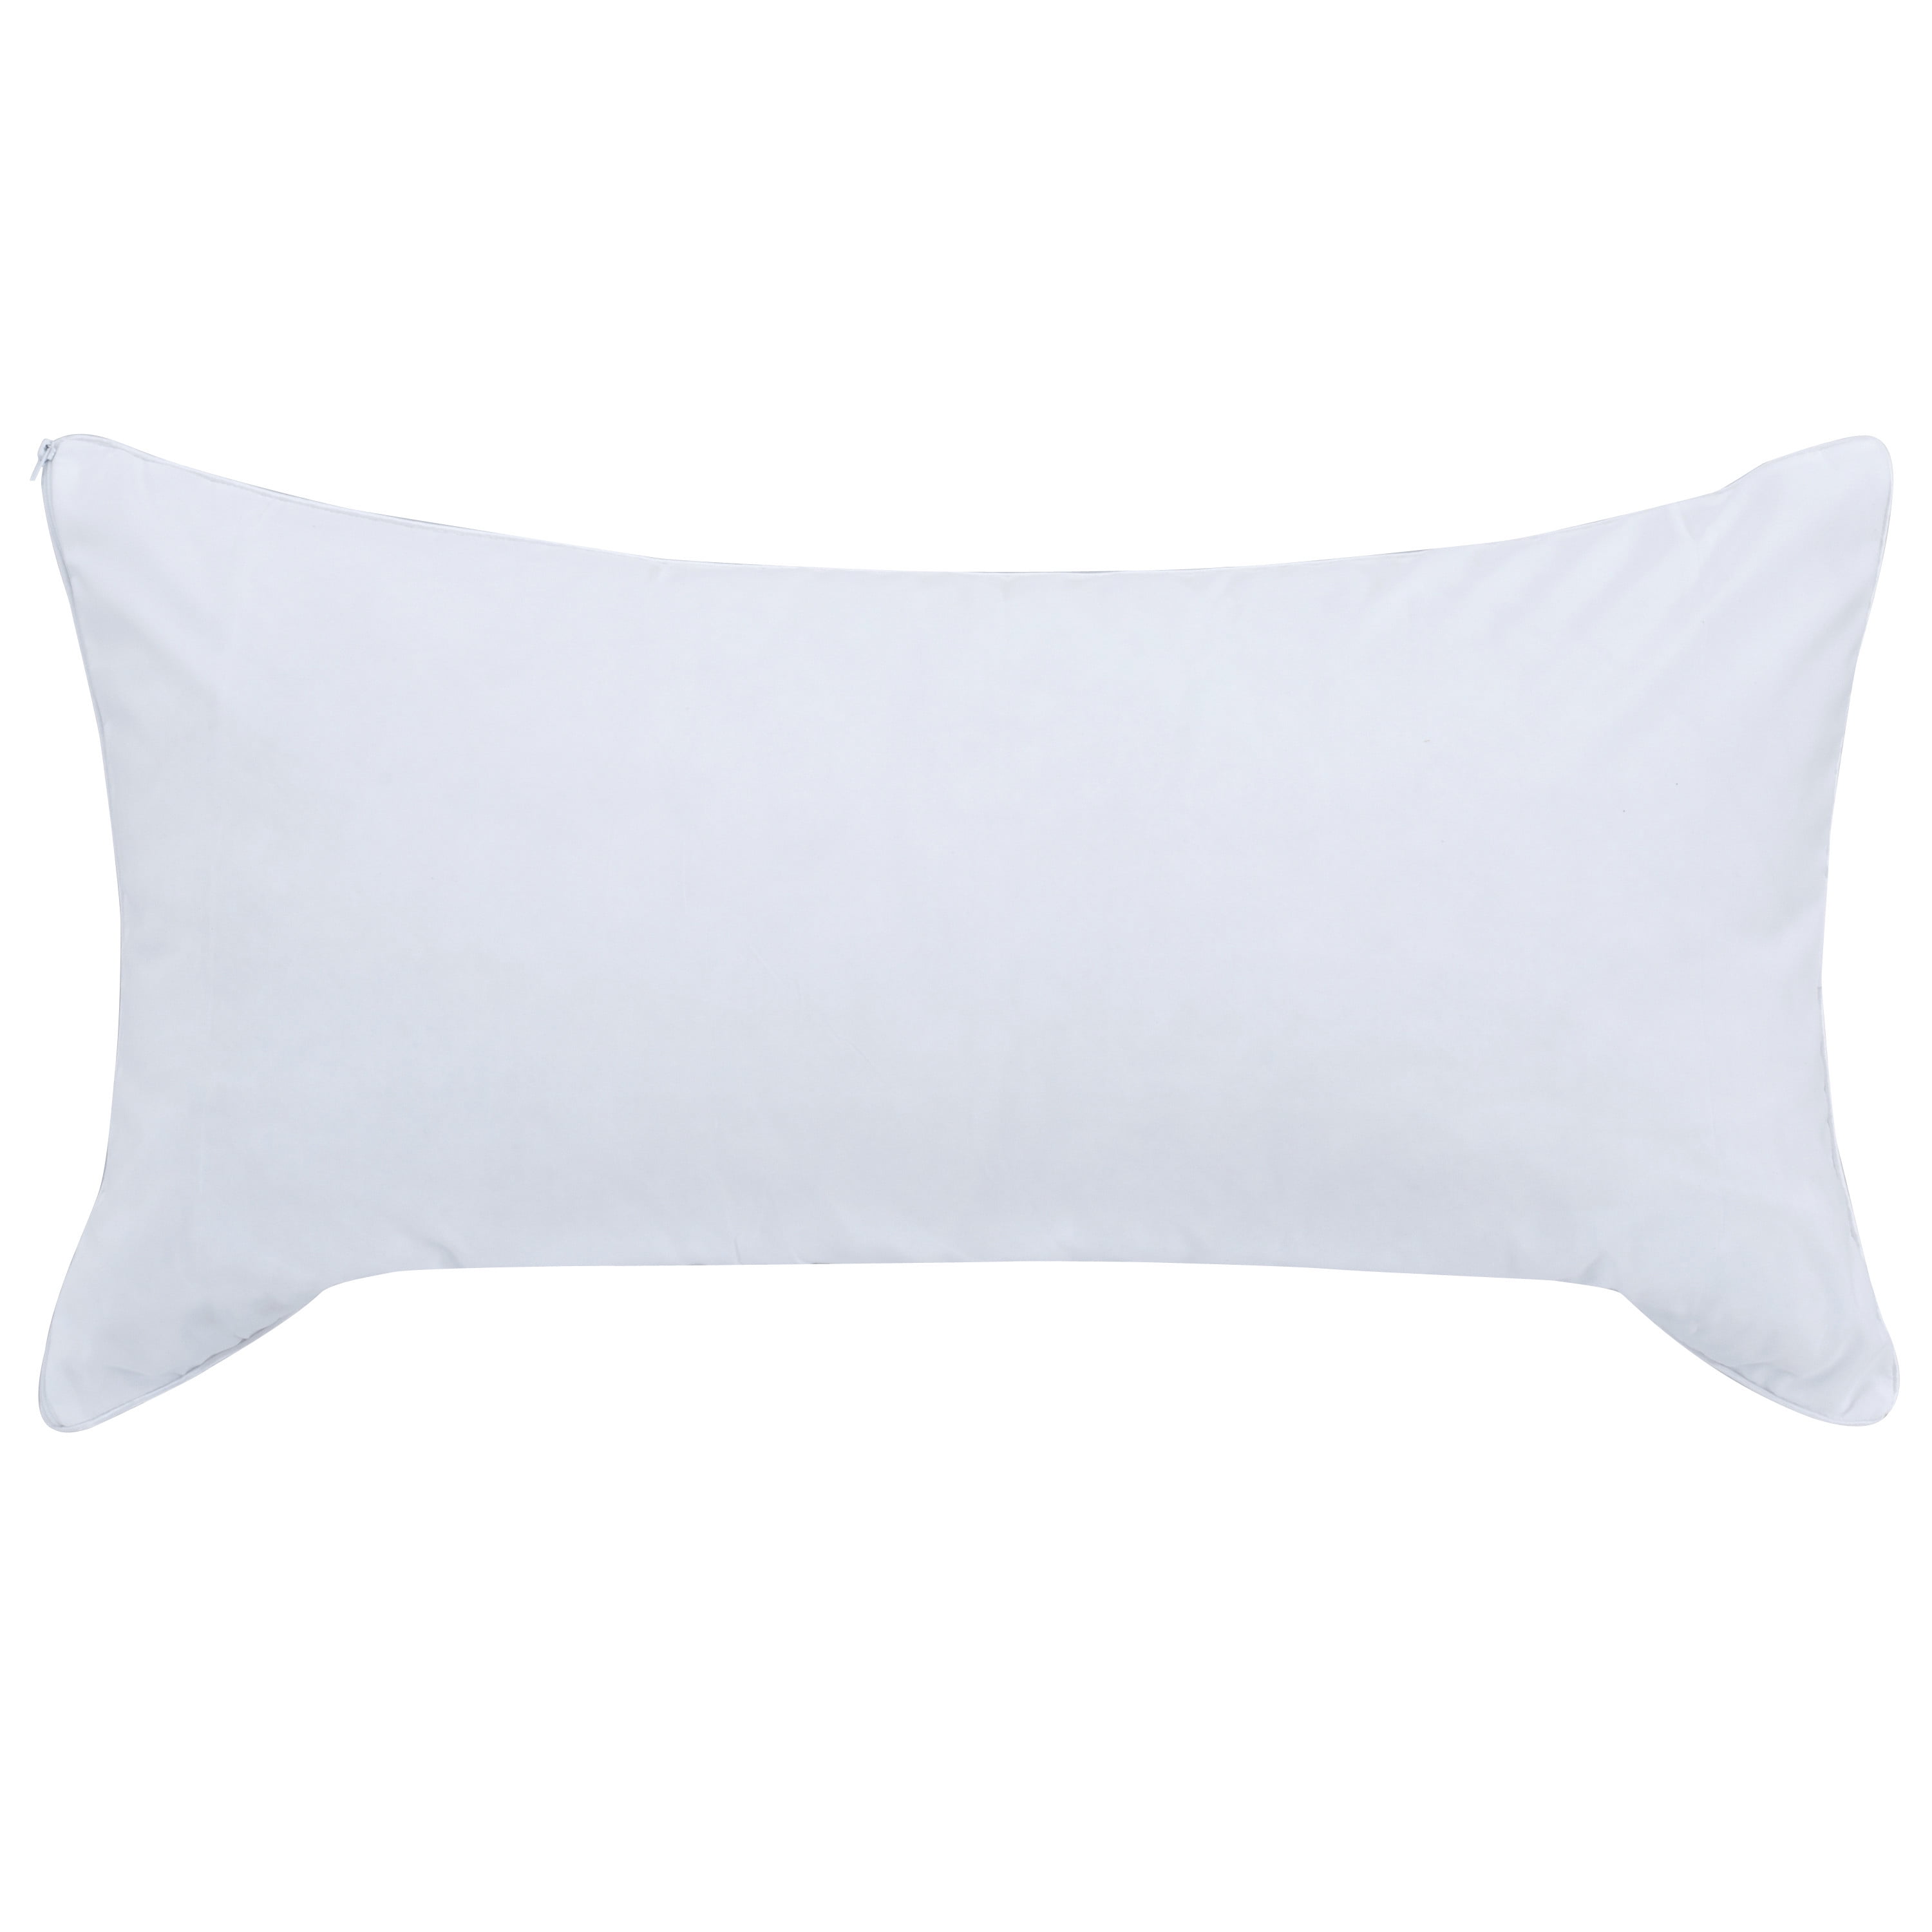 polyurethane foam pillows health risks